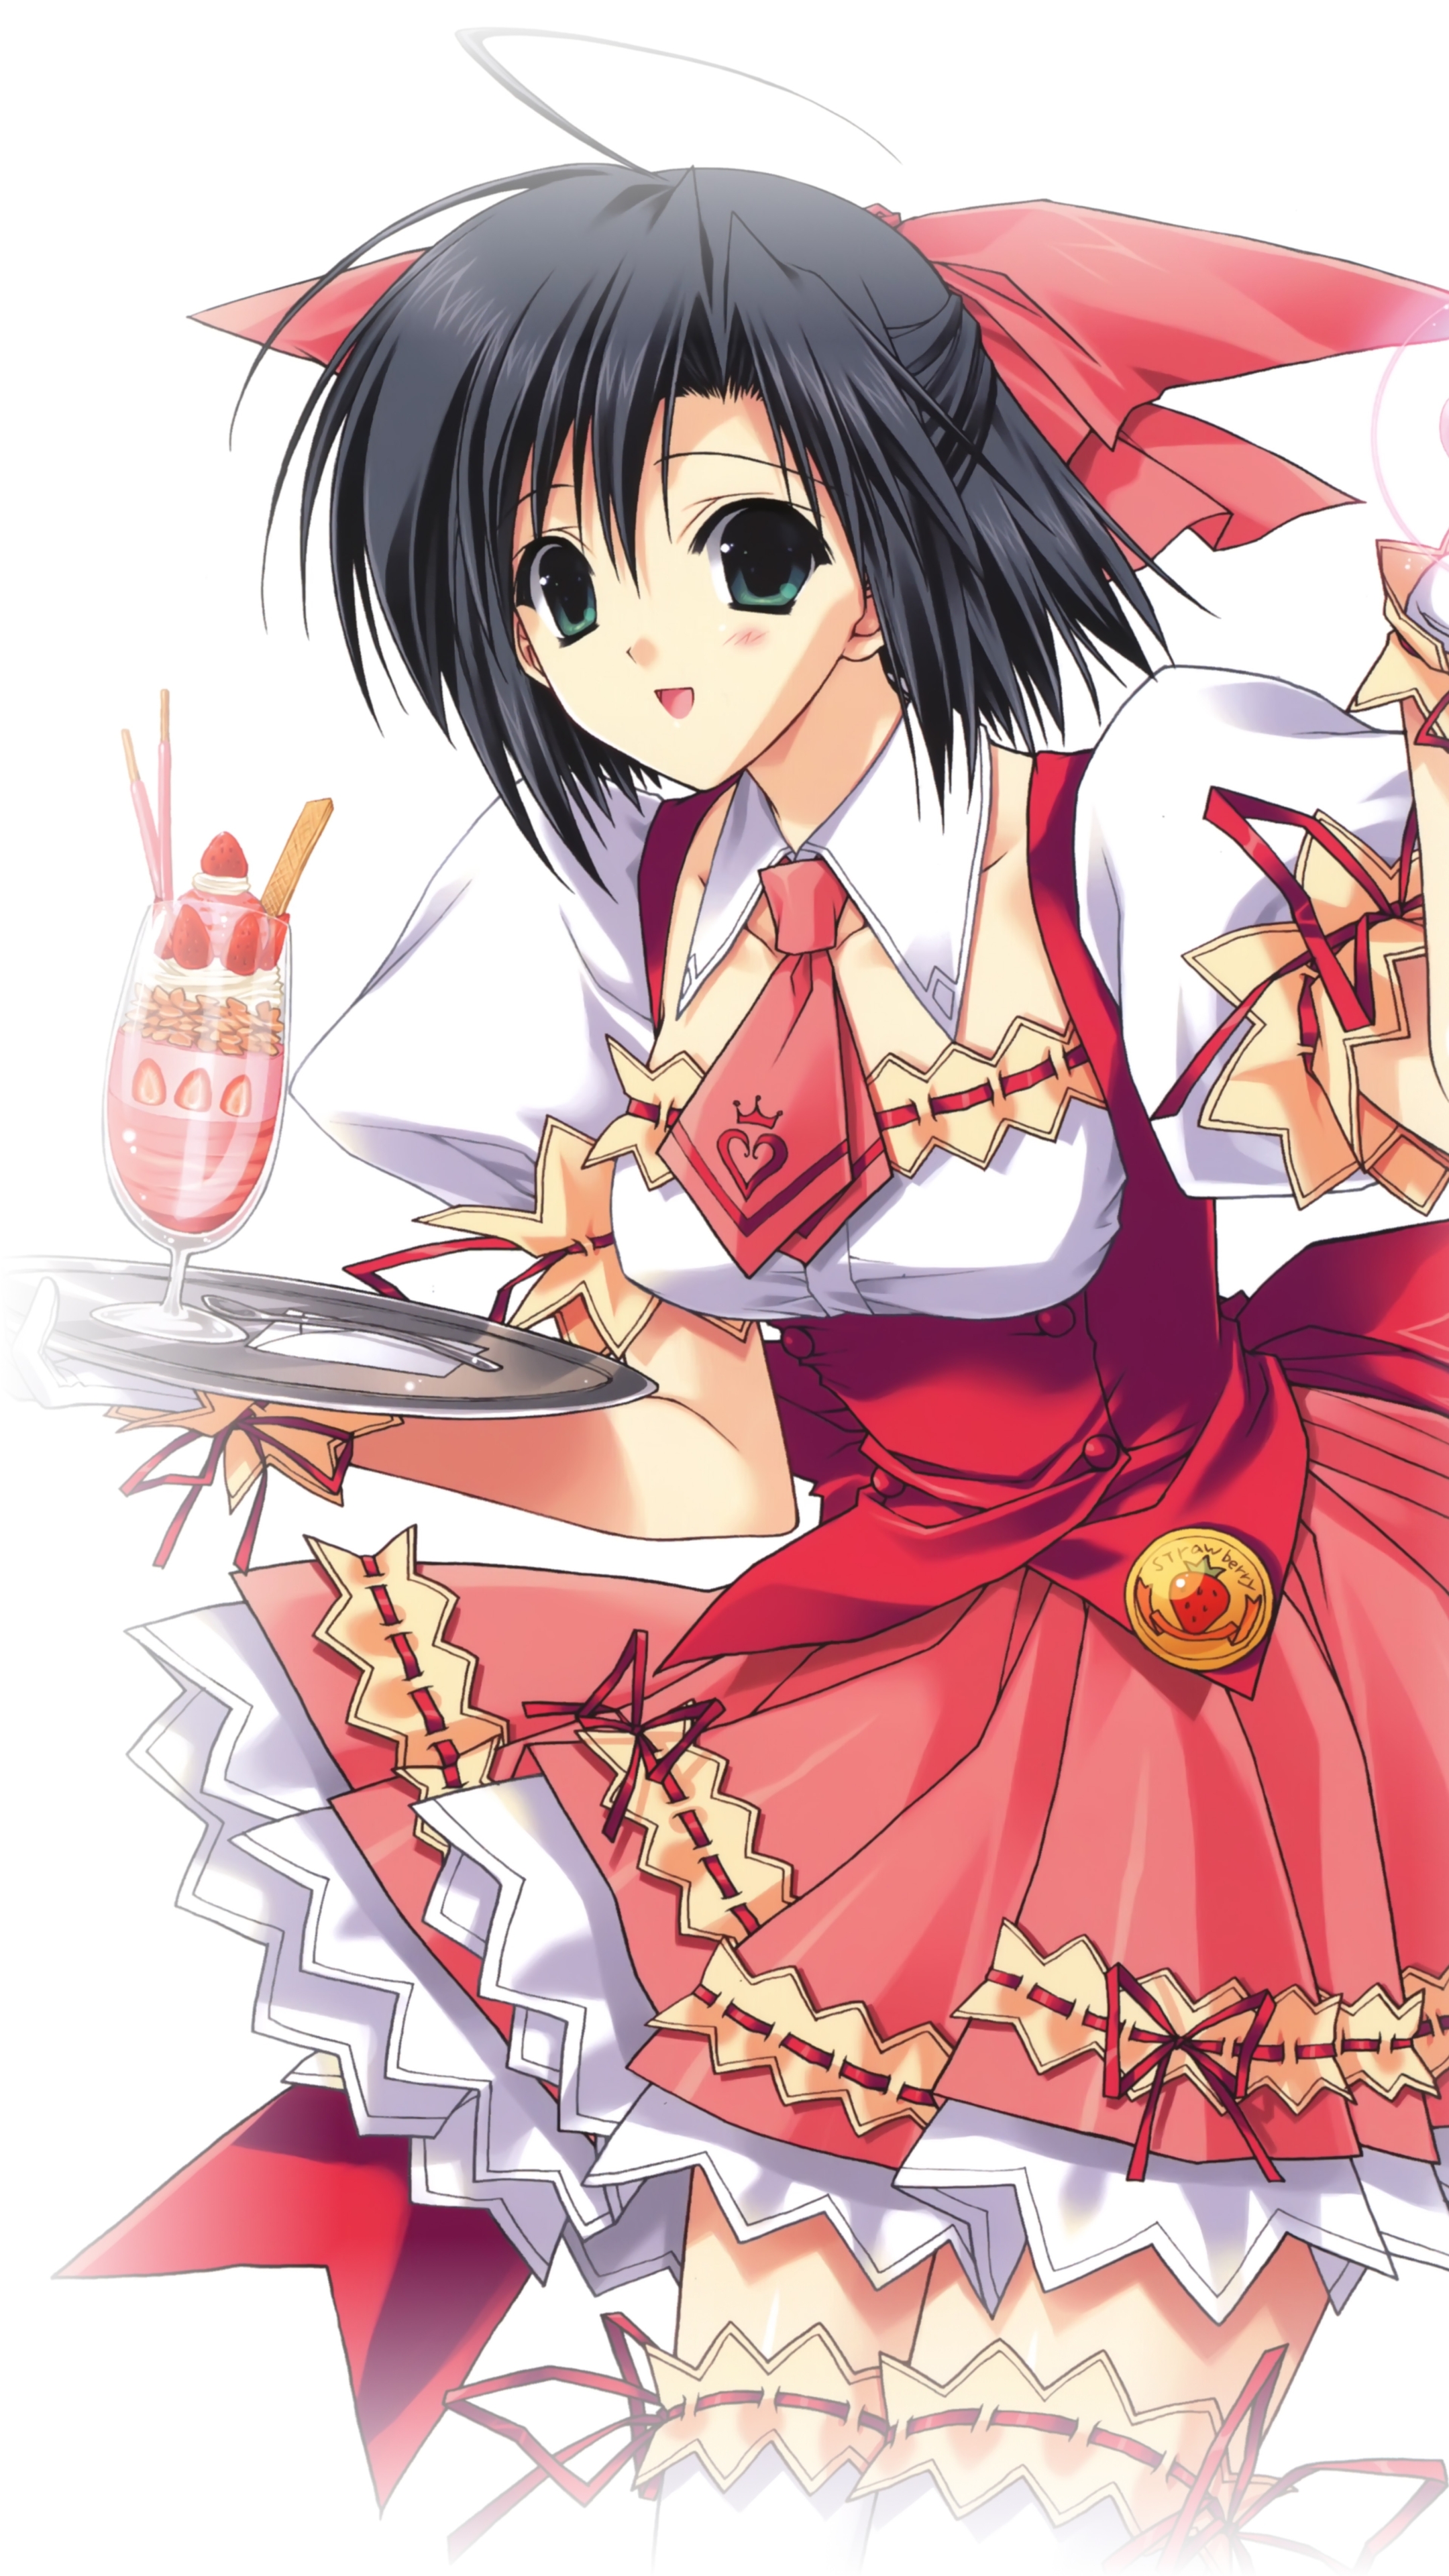 Descarga gratuita de fondo de pantalla para móvil de Animado, Yae Sakura (¡aleatorio!), ¡barajar!.